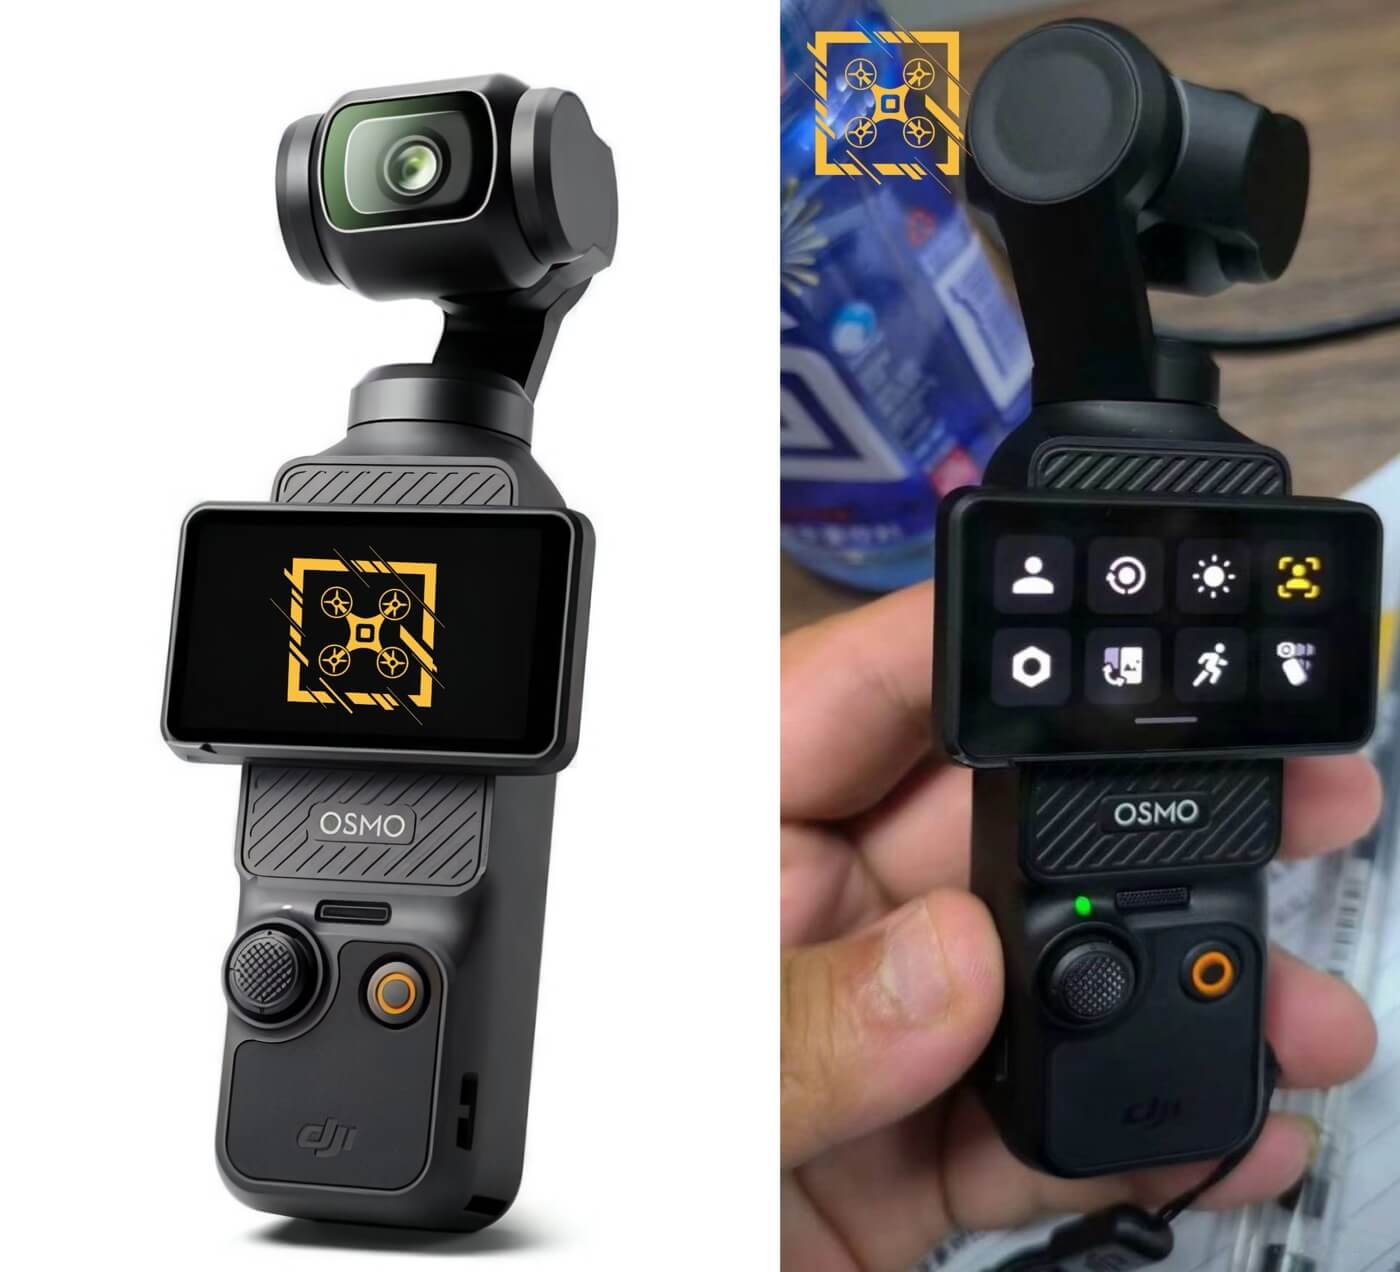 DJIの人気小型ジンバルカメラの最新モデル｢Pocket 3｣の多数の製品画像や開封動画が公開される ｰ 10月25日に正式発表へ